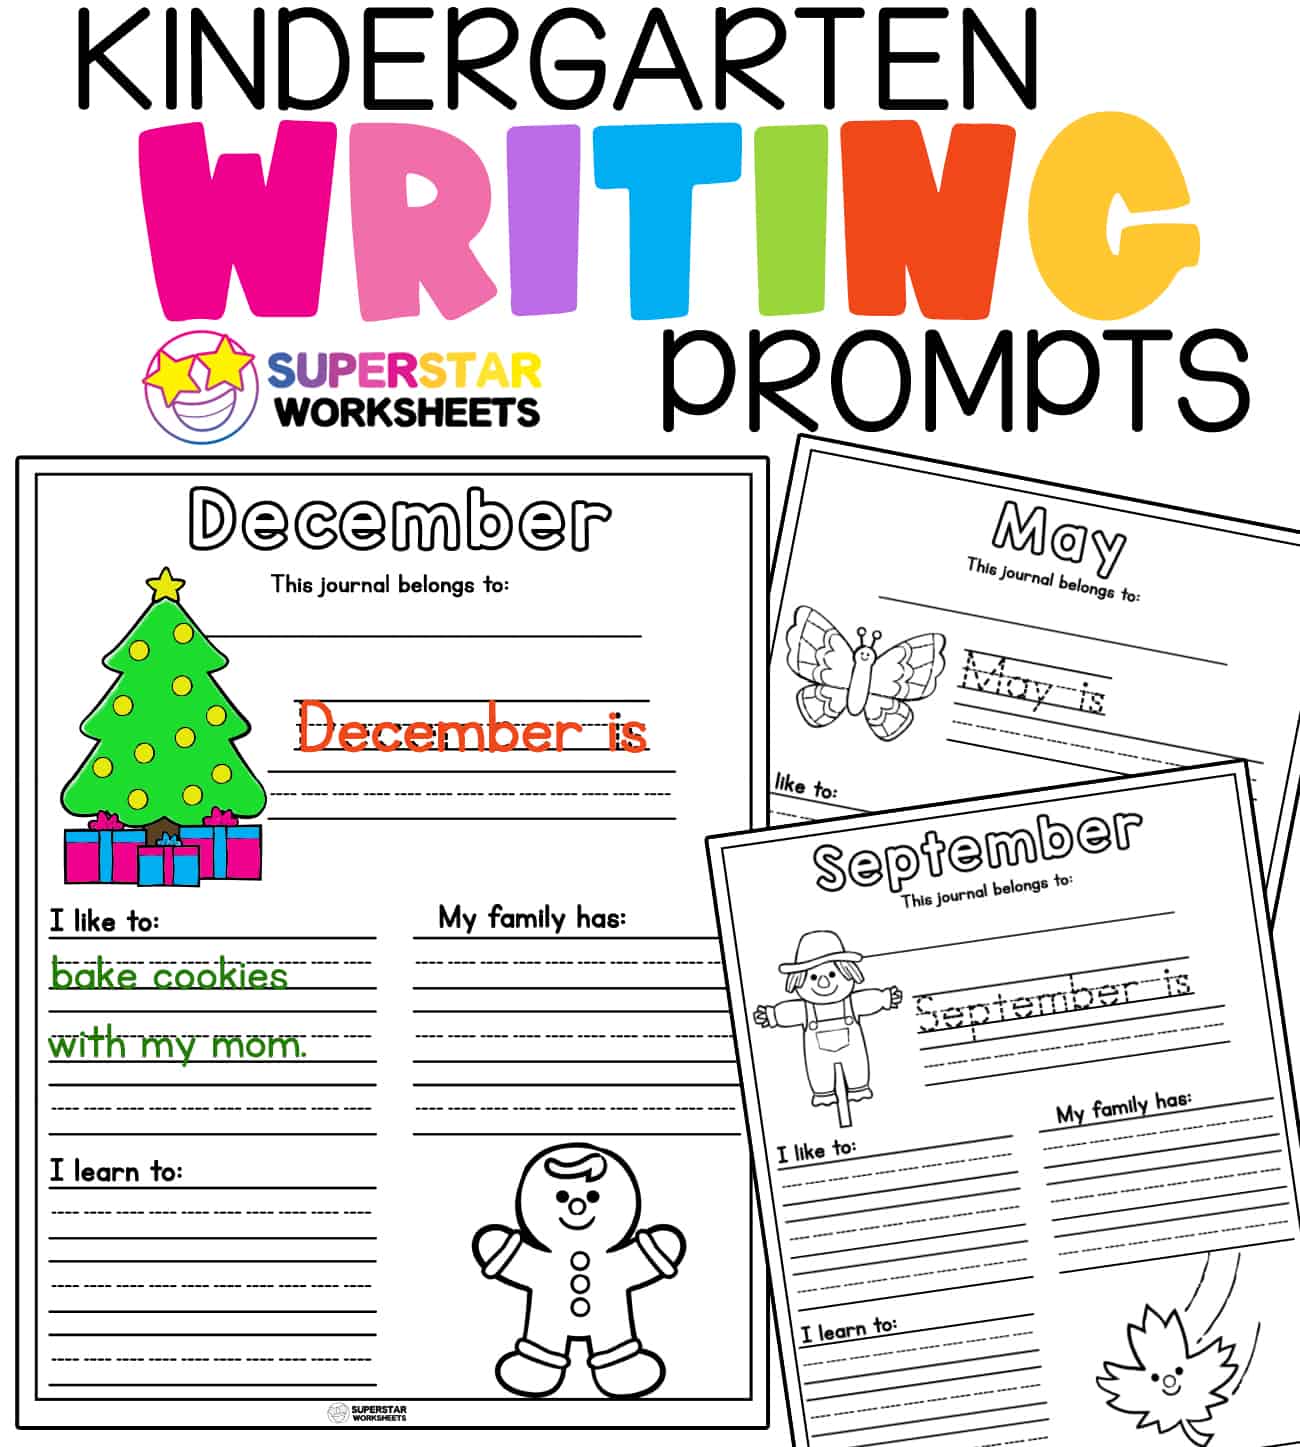 Kindergarten Writing Prompts - Superstar Worksheets